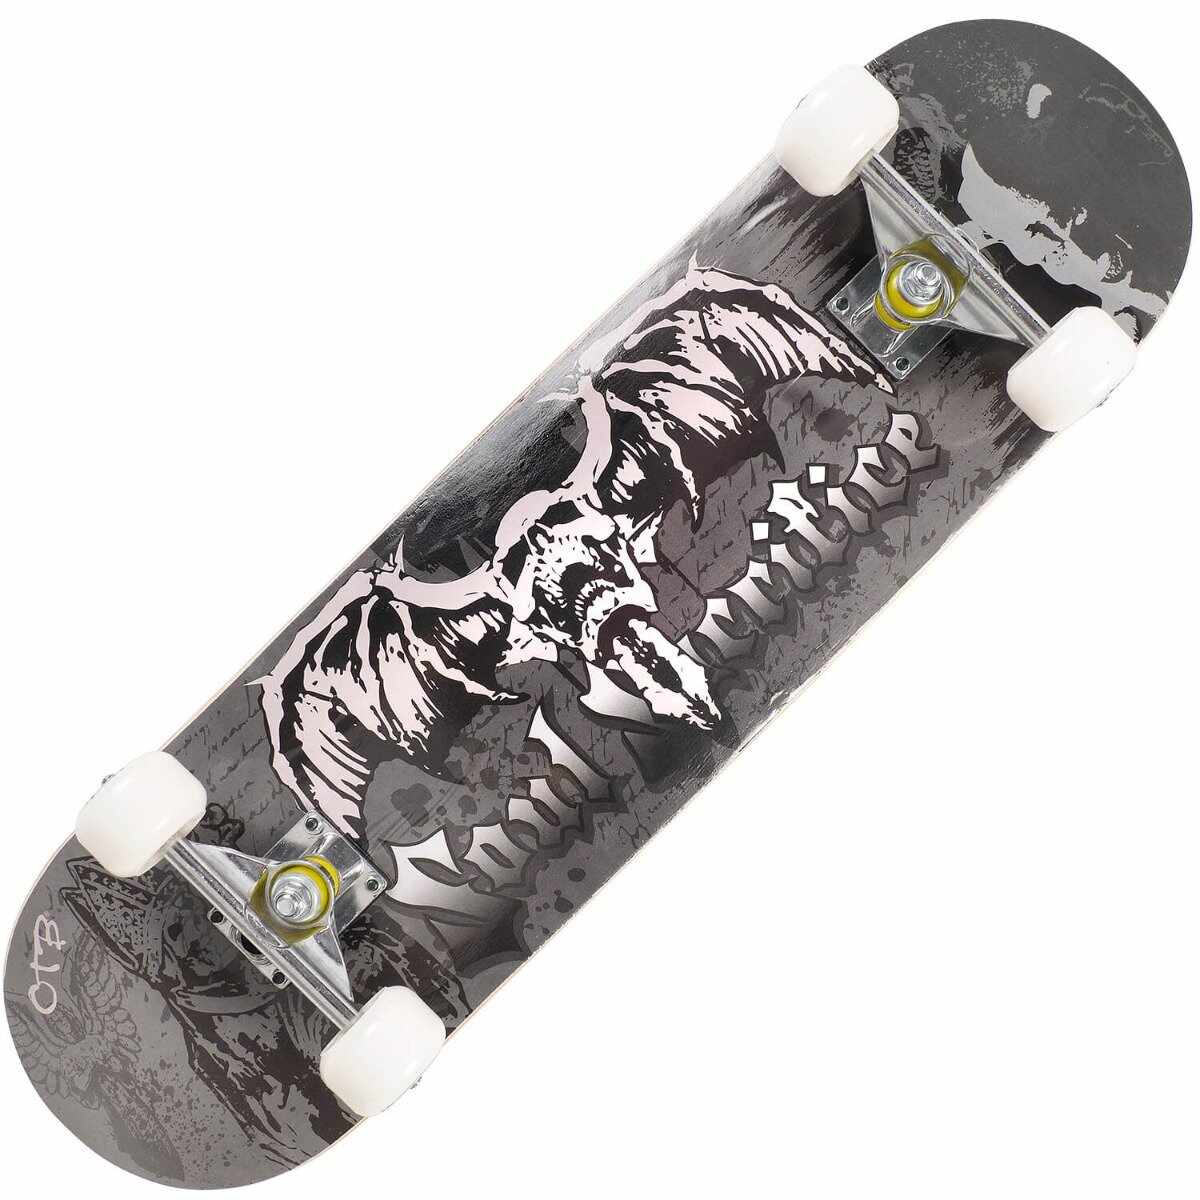 Skateboard Sacrifice, Action One, Abec-7, Aluminiu, 79x20 cm, multicolor